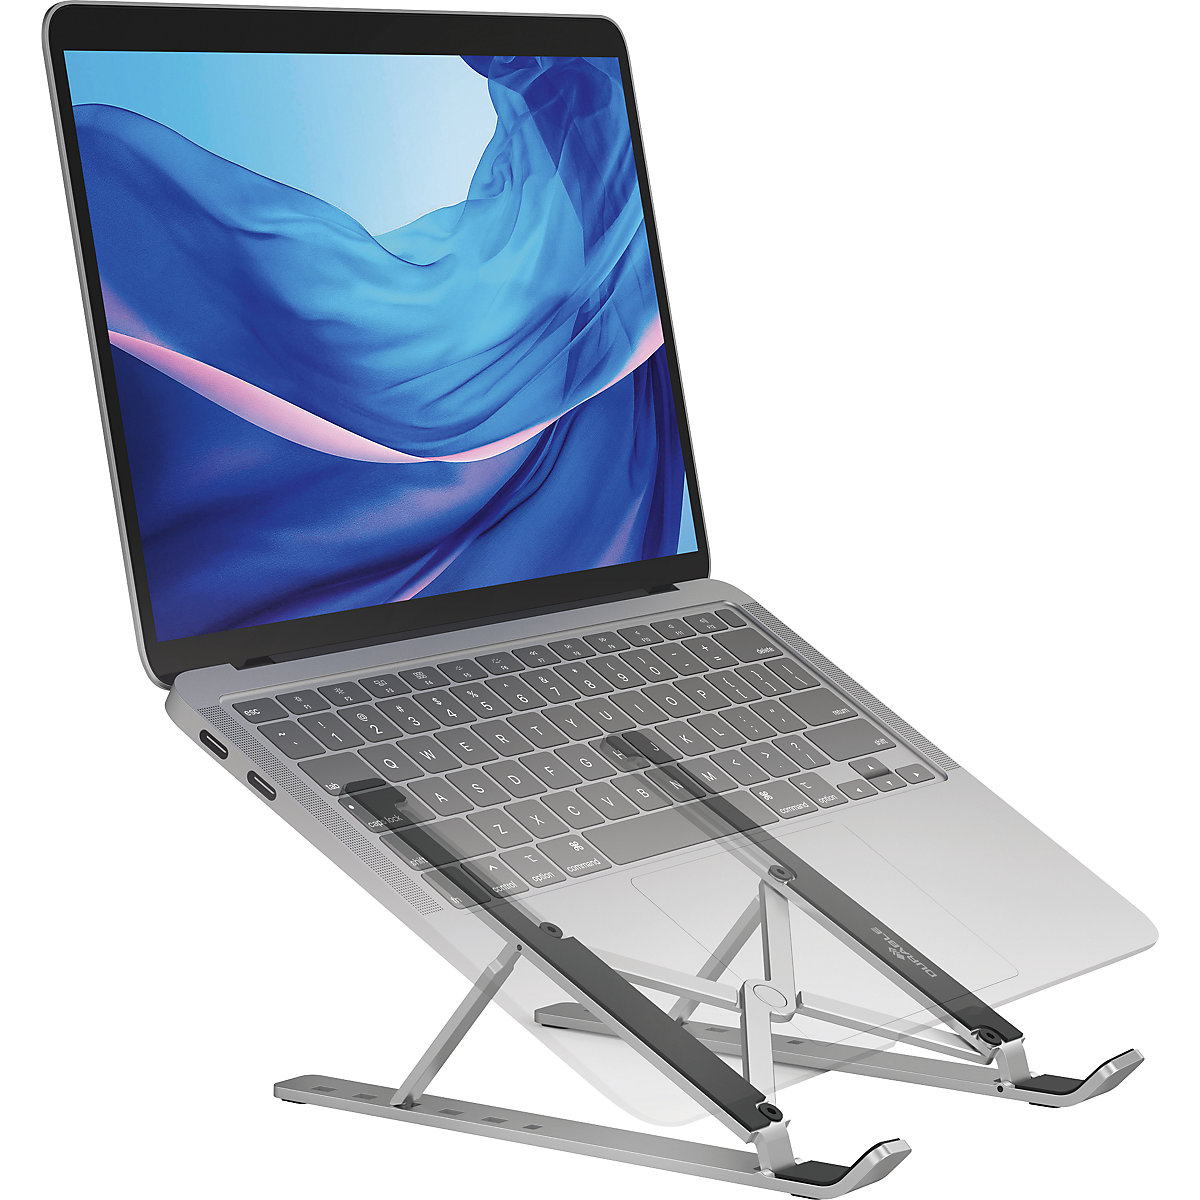 Stojak pod laptopa STAND FOLD – DURABLE